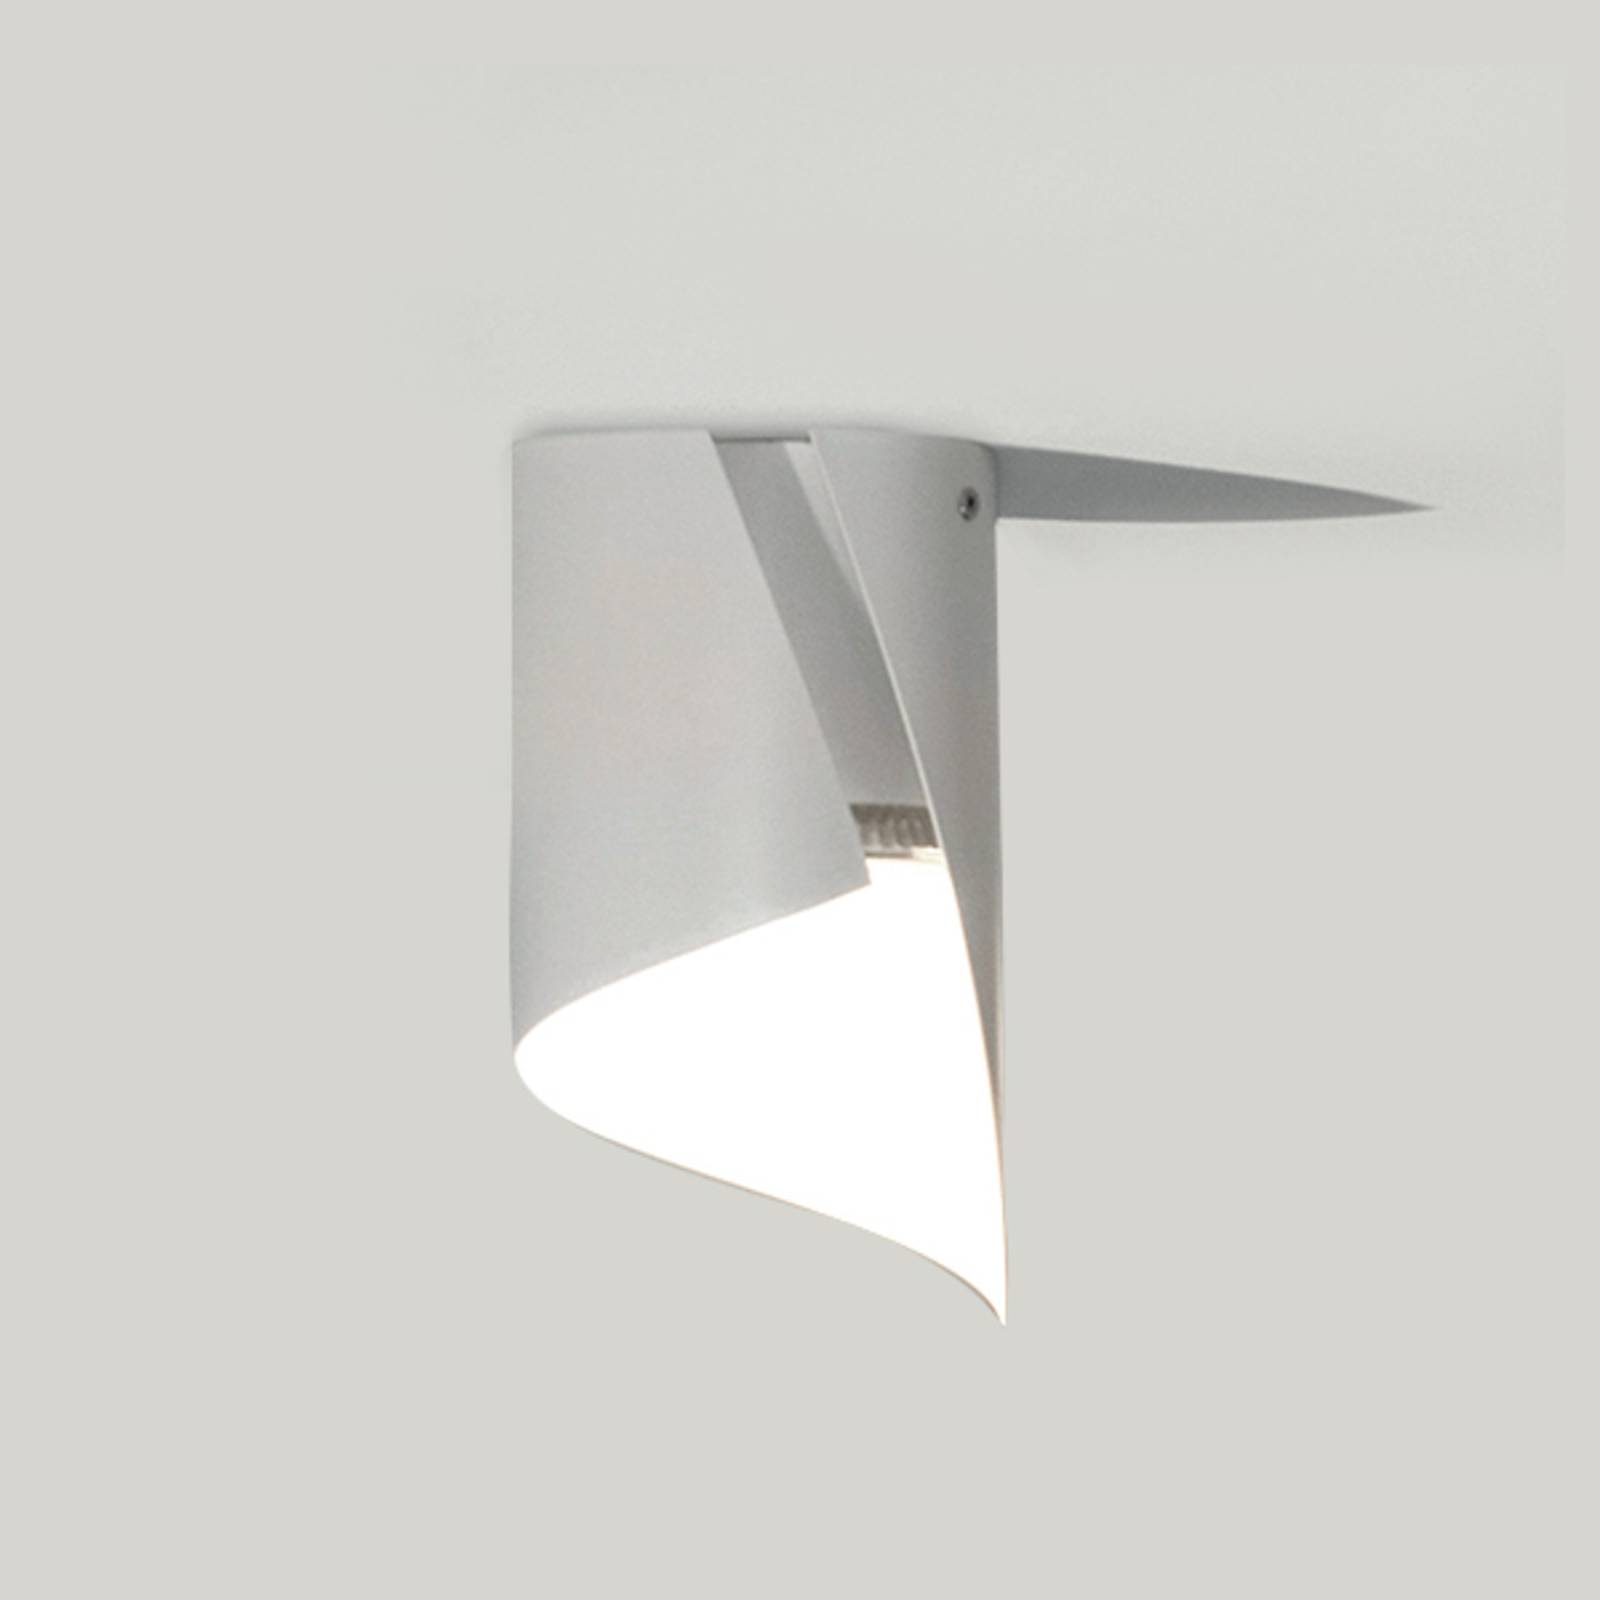 Knikerboker Hué lampa sufitowa LED 8x15cm biała